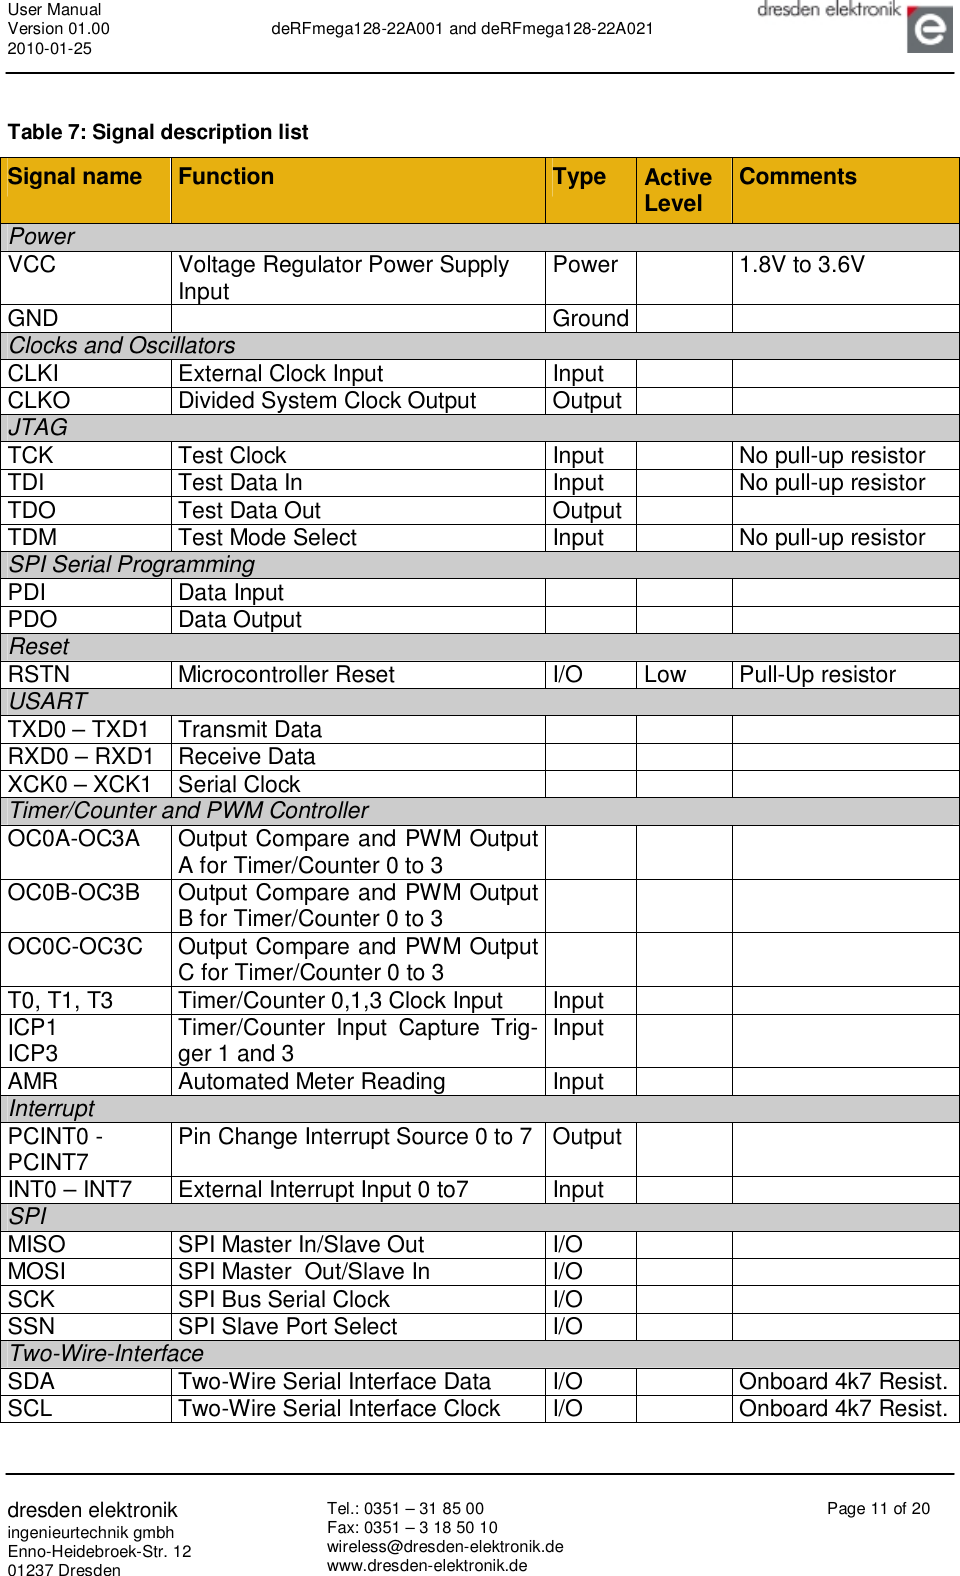 User Manual Version 01.00 2010-01-25  deRFmega128-22A001 and deRFmega128-22A021       dresden elektronik ingenieurtechnik gmbh Enno-Heidebroek-Str. 12 01237 Dresden Tel.: 0351 – 31 85 00 Fax: 0351 – 3 18 50 10 wireless@dresden-elektronik.de www.dresden-elektronik.de Page 11 of 20   Table 7: Signal description list Signal name  Function  Type  Active Level  Comments Power VCC     Voltage Regulator Power Supply Input  Power   1.8V to 3.6V GND    Ground    Clocks and Oscillators CLKI  External Clock Input  Input     CLKO  Divided System Clock Output  Output    JTAG TCK  Test Clock  Input    No pull-up resistor TDI  Test Data In  Input    No pull-up resistor TDO  Test Data Out  Output    TDM  Test Mode Select  Input    No pull-up resistor SPI Serial Programming PDI  Data Input       PDO  Data Output       Reset RSTN  Microcontroller Reset  I/O  Low  Pull-Up resistor USART TXD0 – TXD1 Transmit Data       RXD0 – RXD1 Receive Data       XCK0 – XCK1 Serial Clock       Timer/Counter and PWM Controller OC0A-OC3A  Output Compare and PWM Output A for Timer/Counter 0 to 3       OC0B-OC3B  Output Compare and PWM Output B for Timer/Counter 0 to 3       OC0C-OC3C  Output Compare and PWM Output C for Timer/Counter 0 to 3       T0, T1, T3  Timer/Counter 0,1,3 Clock Input  Input     ICP1 ICP3  Timer/Counter Input Capture Trig-ger 1 and 3  Input     AMR  Automated Meter Reading  Input     Interrupt PCINT0 - PCINT7  Pin Change Interrupt Source 0 to 7 Output    INT0 – INT7  External Interrupt Input 0 to7  Input     SPI MISO  SPI Master In/Slave Out  I/O     MOSI  SPI Master  Out/Slave In  I/O     SCK  SPI Bus Serial Clock  I/O     SSN  SPI Slave Port Select  I/O     Two-Wire-Interface SDA  Two-Wire Serial Interface Data  I/O    Onboard 4k7 Resist.  SCL  Two-Wire Serial Interface Clock  I/O    Onboard 4k7 Resist.  